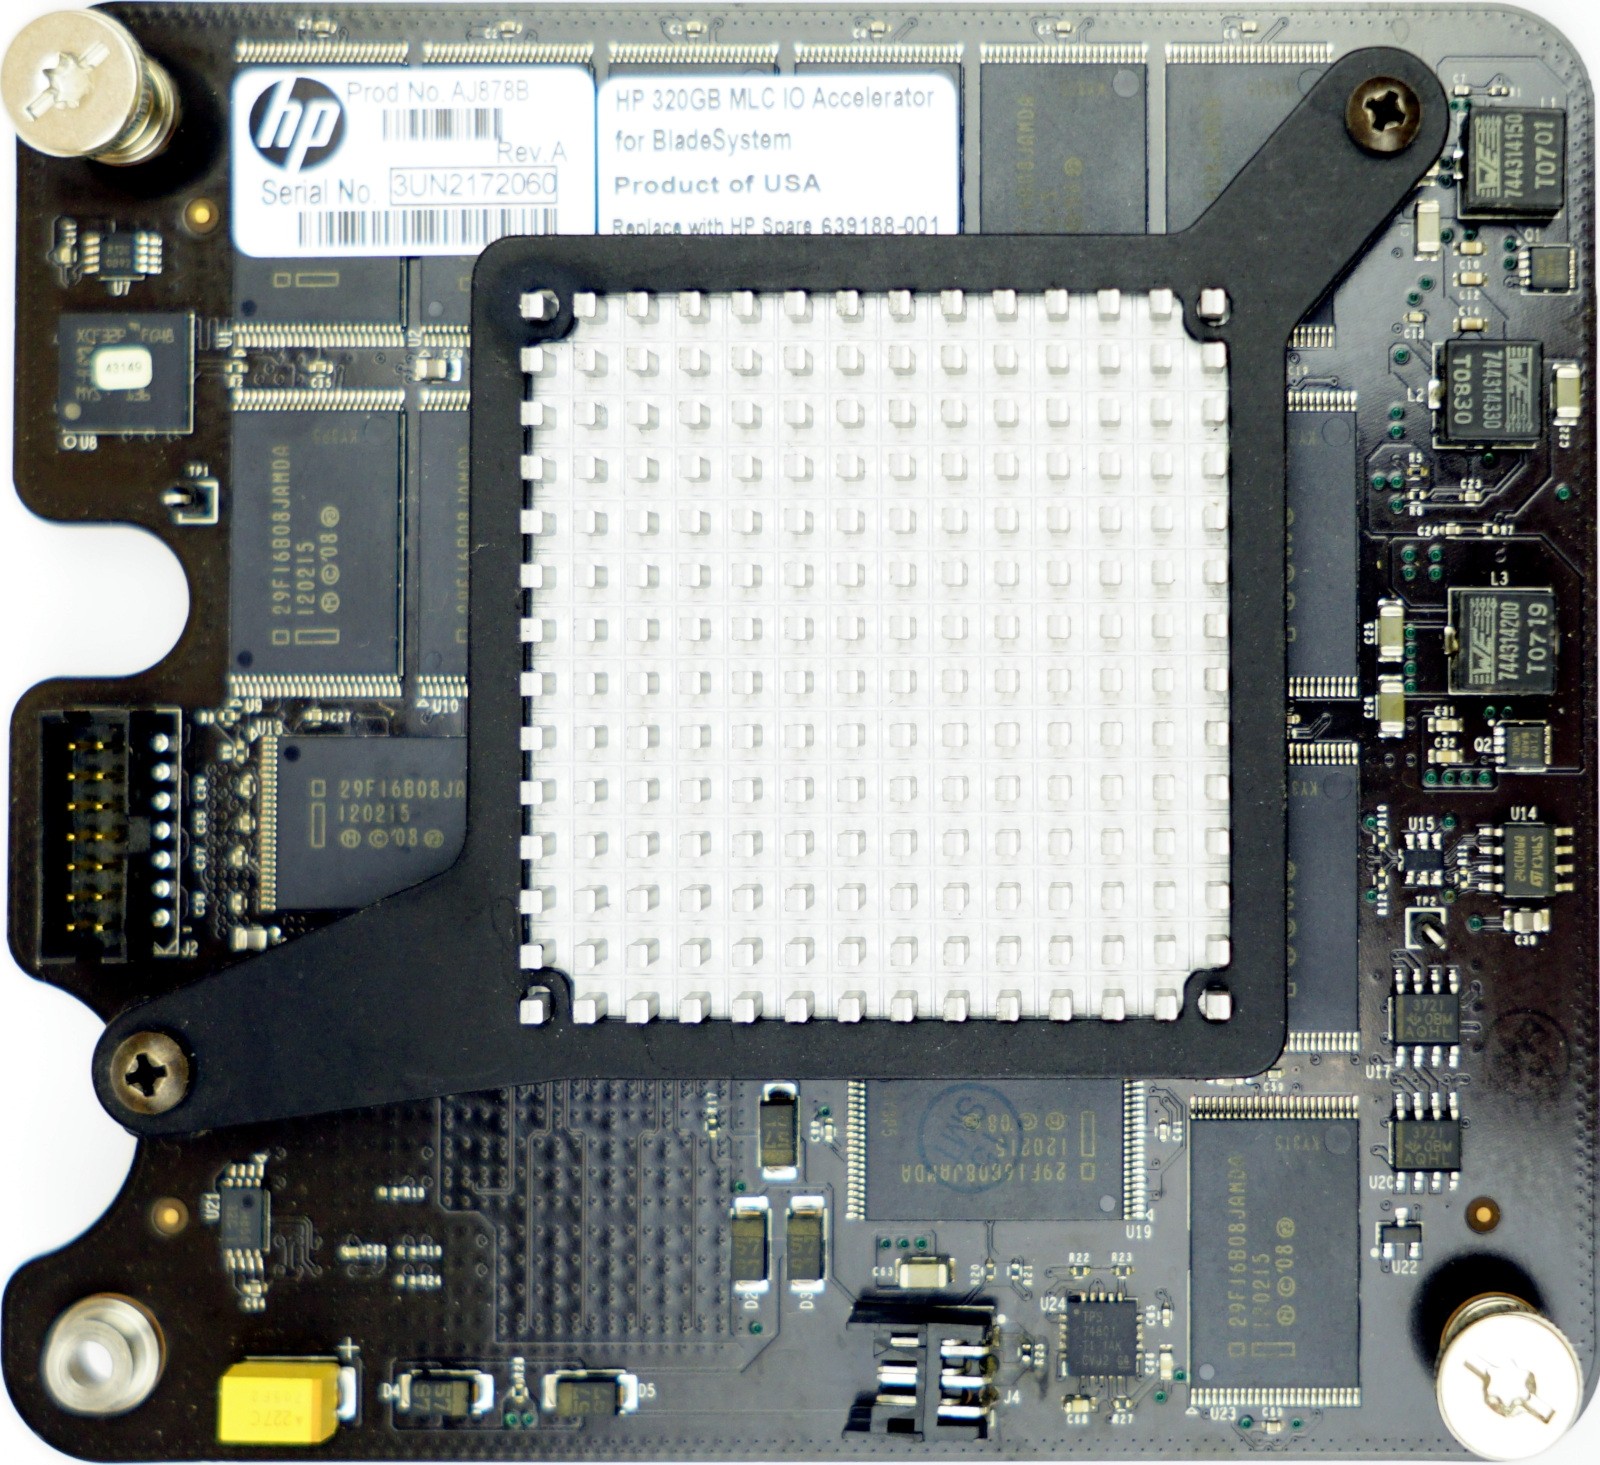 HP Fusion AJ878B - 320GB MLC I/O Accelerator BL-c Mezzanine